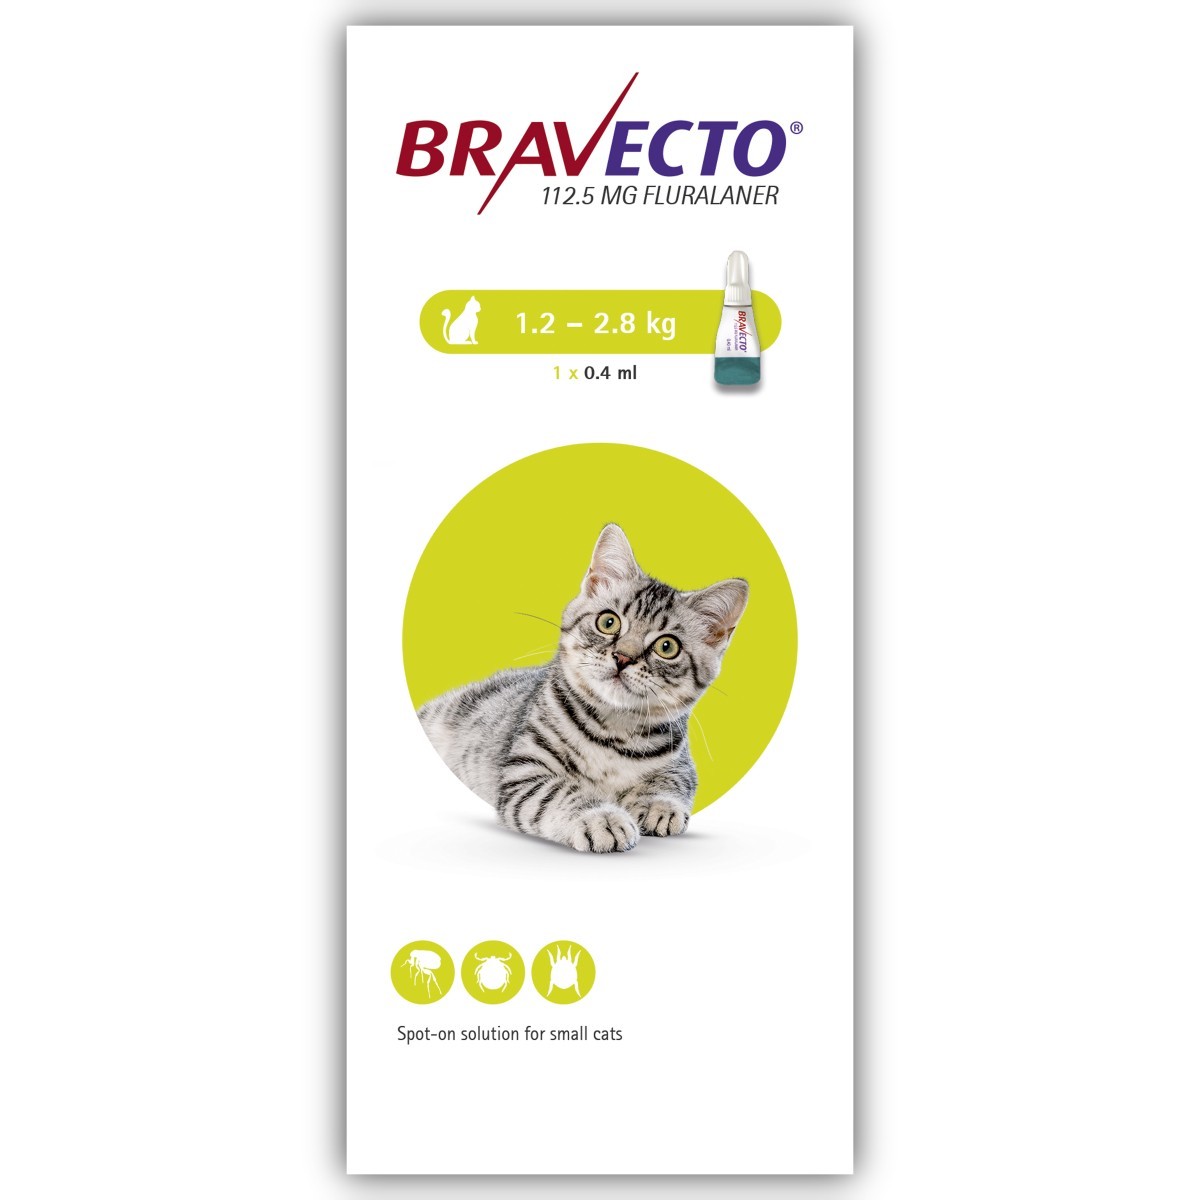 Antiparazitare - Bravecto Spot On Cat 112,5 mg (1.2-2.8 kg), magazindeanimale.ro